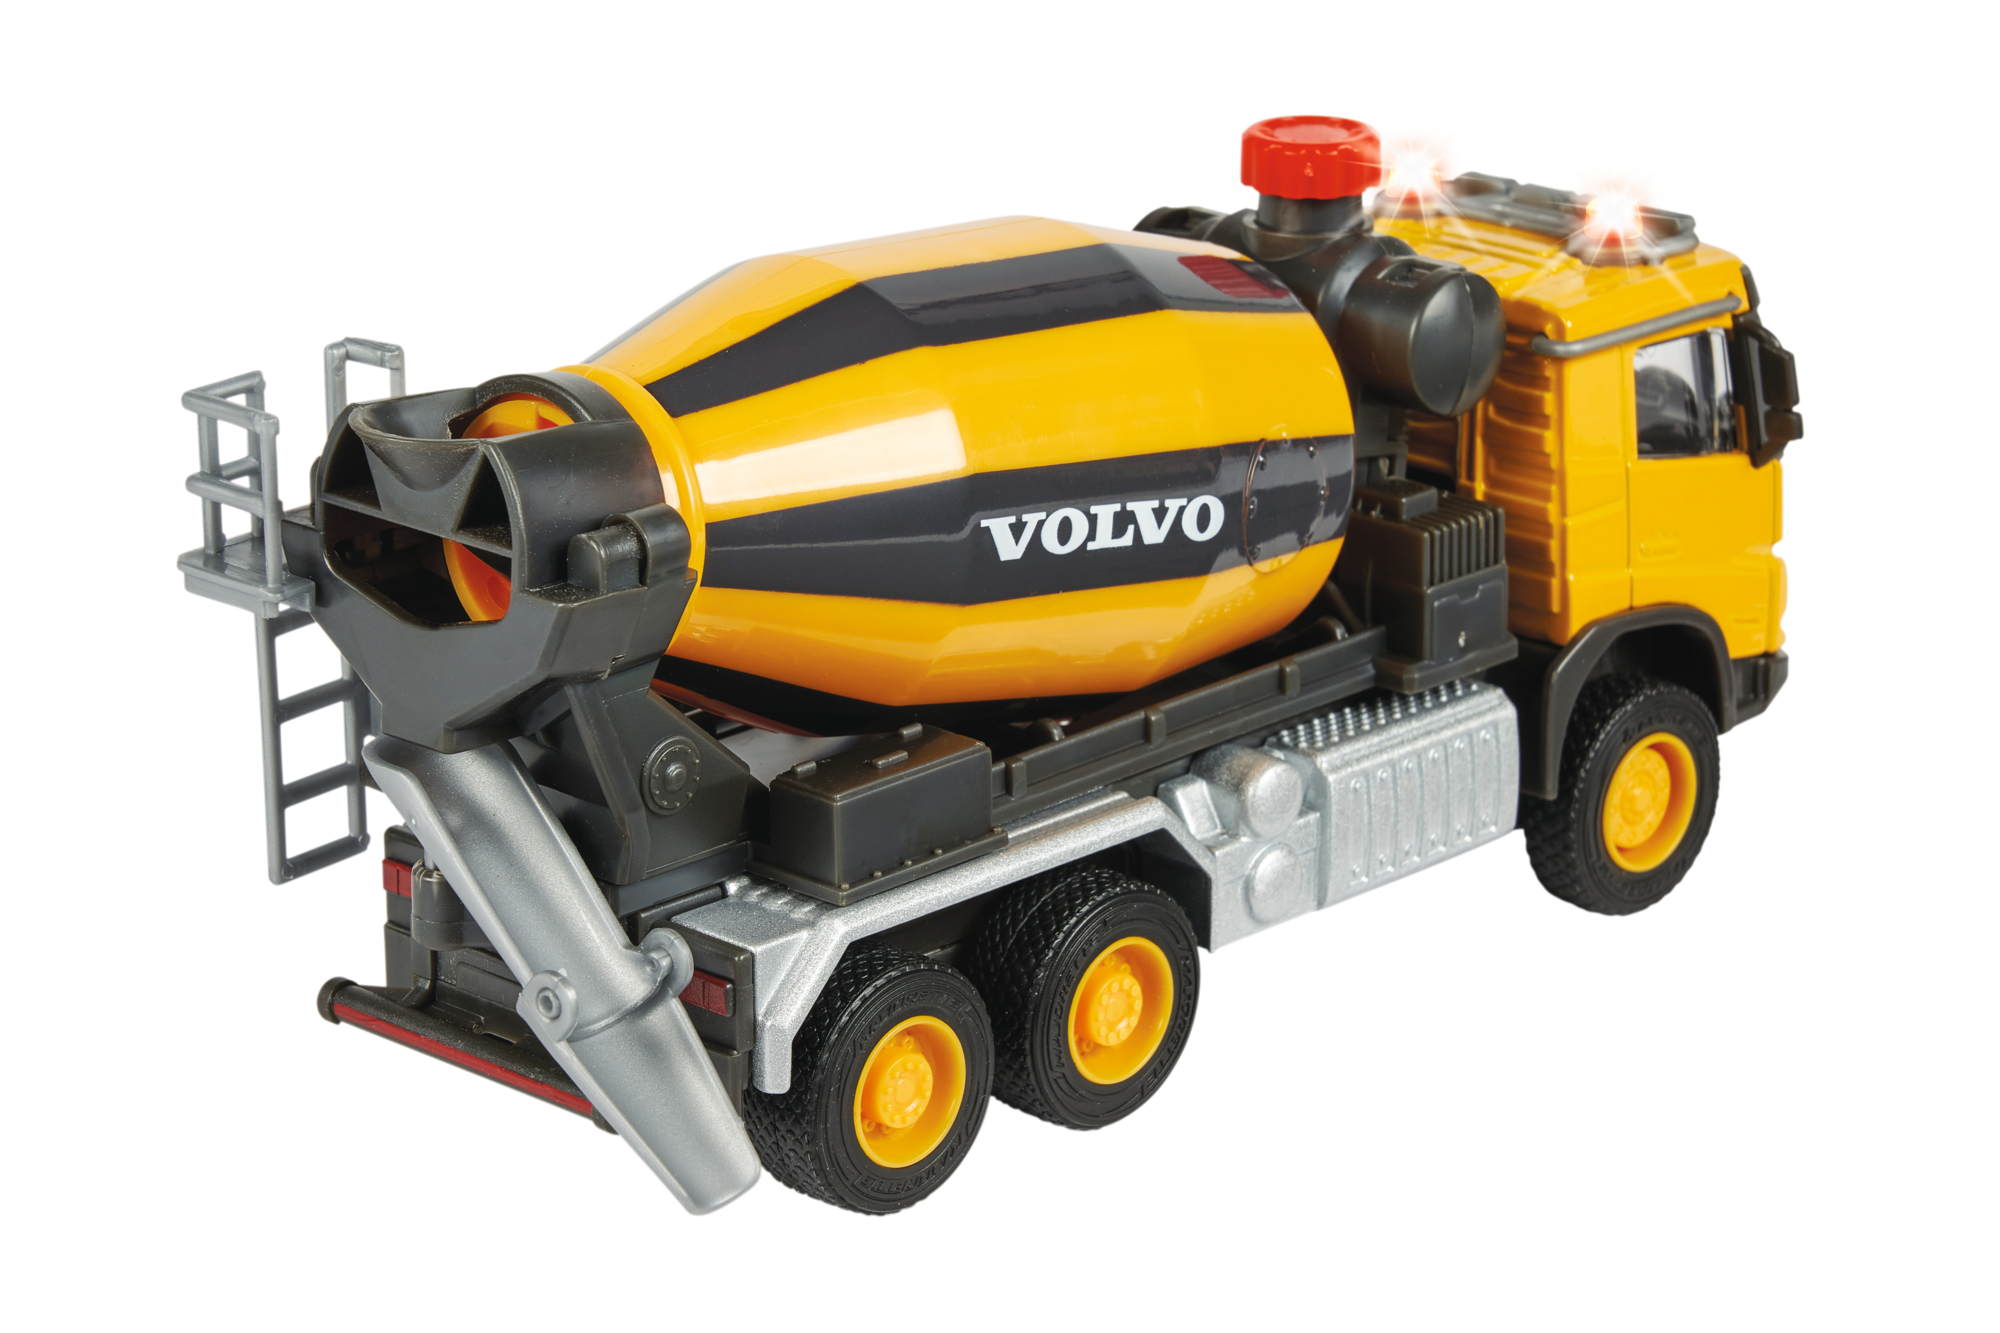 MAJORETTE Volvo Truck Cement Mixer Spielzeugauto Mehrfarbig